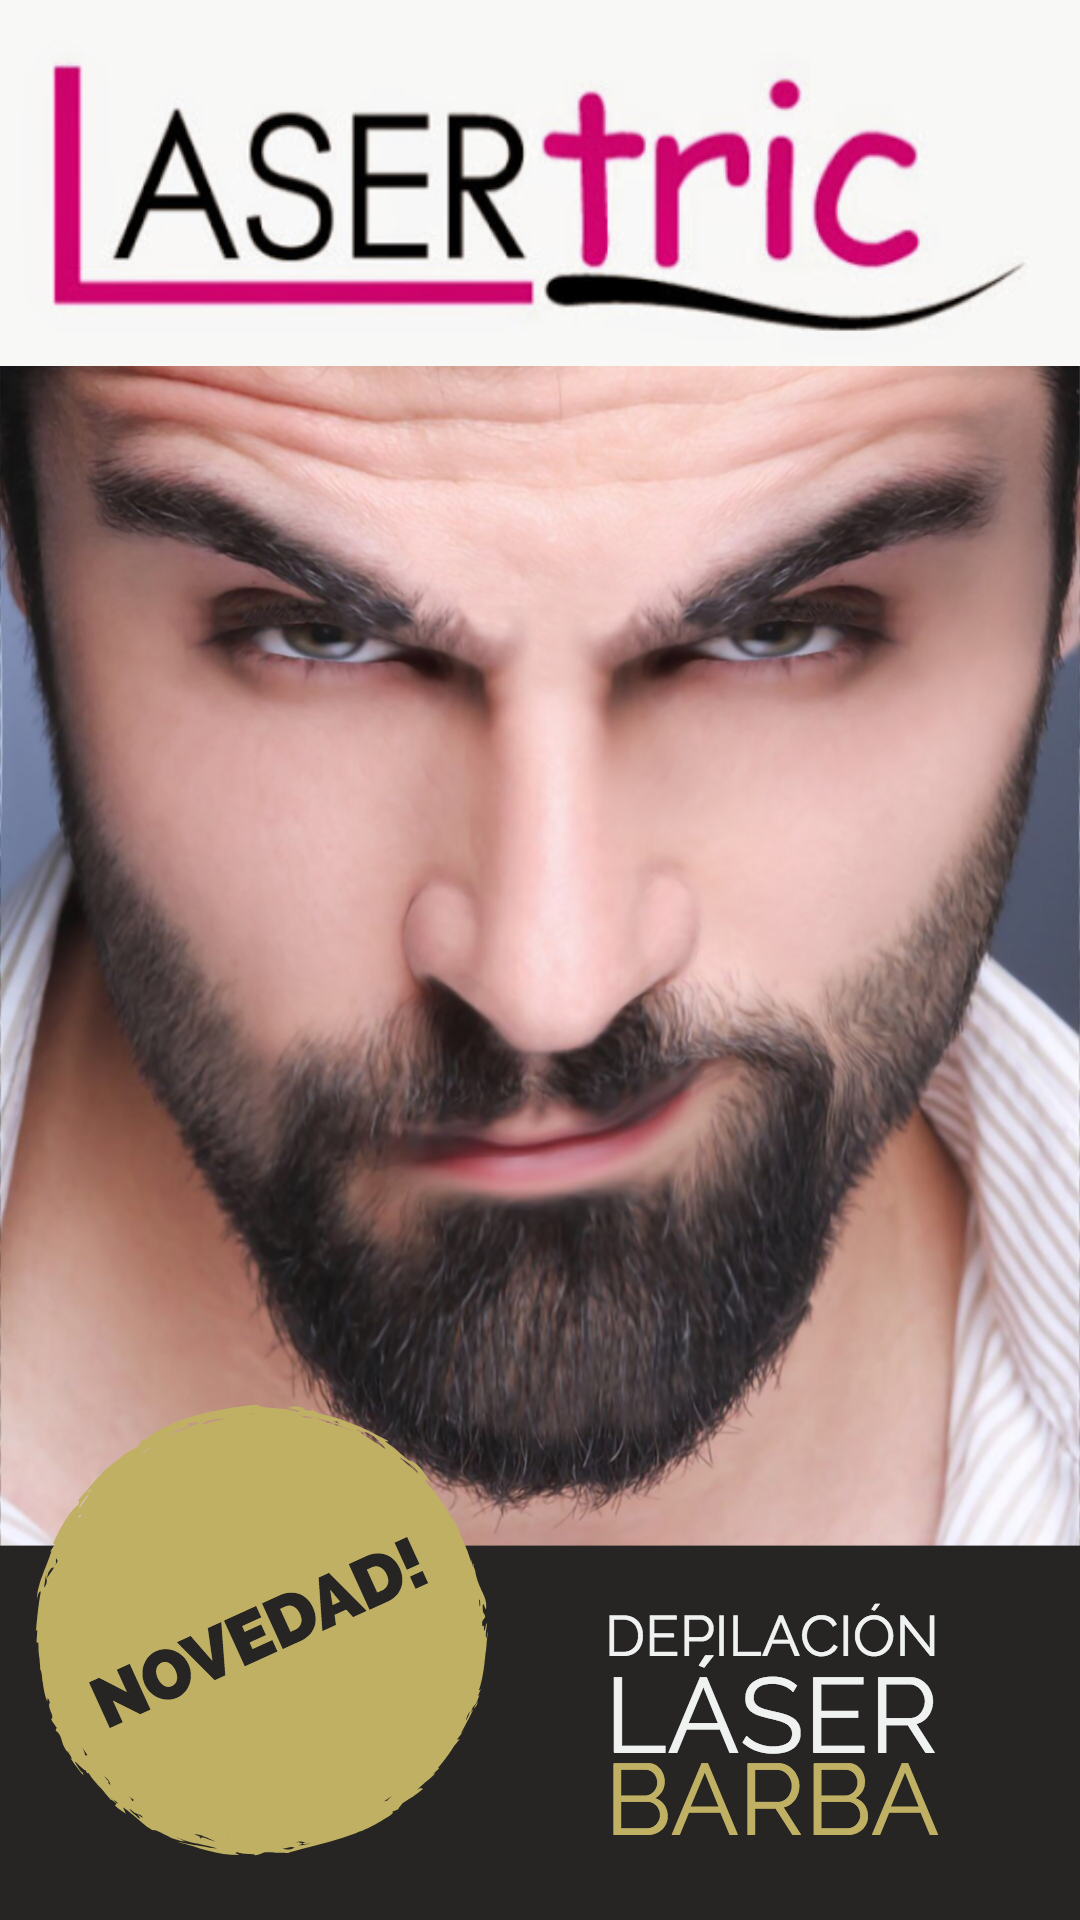 Almacén Sin lugar a dudas Accidentalmente Depilación láser en la barba para hombres | Lasertric Málaga